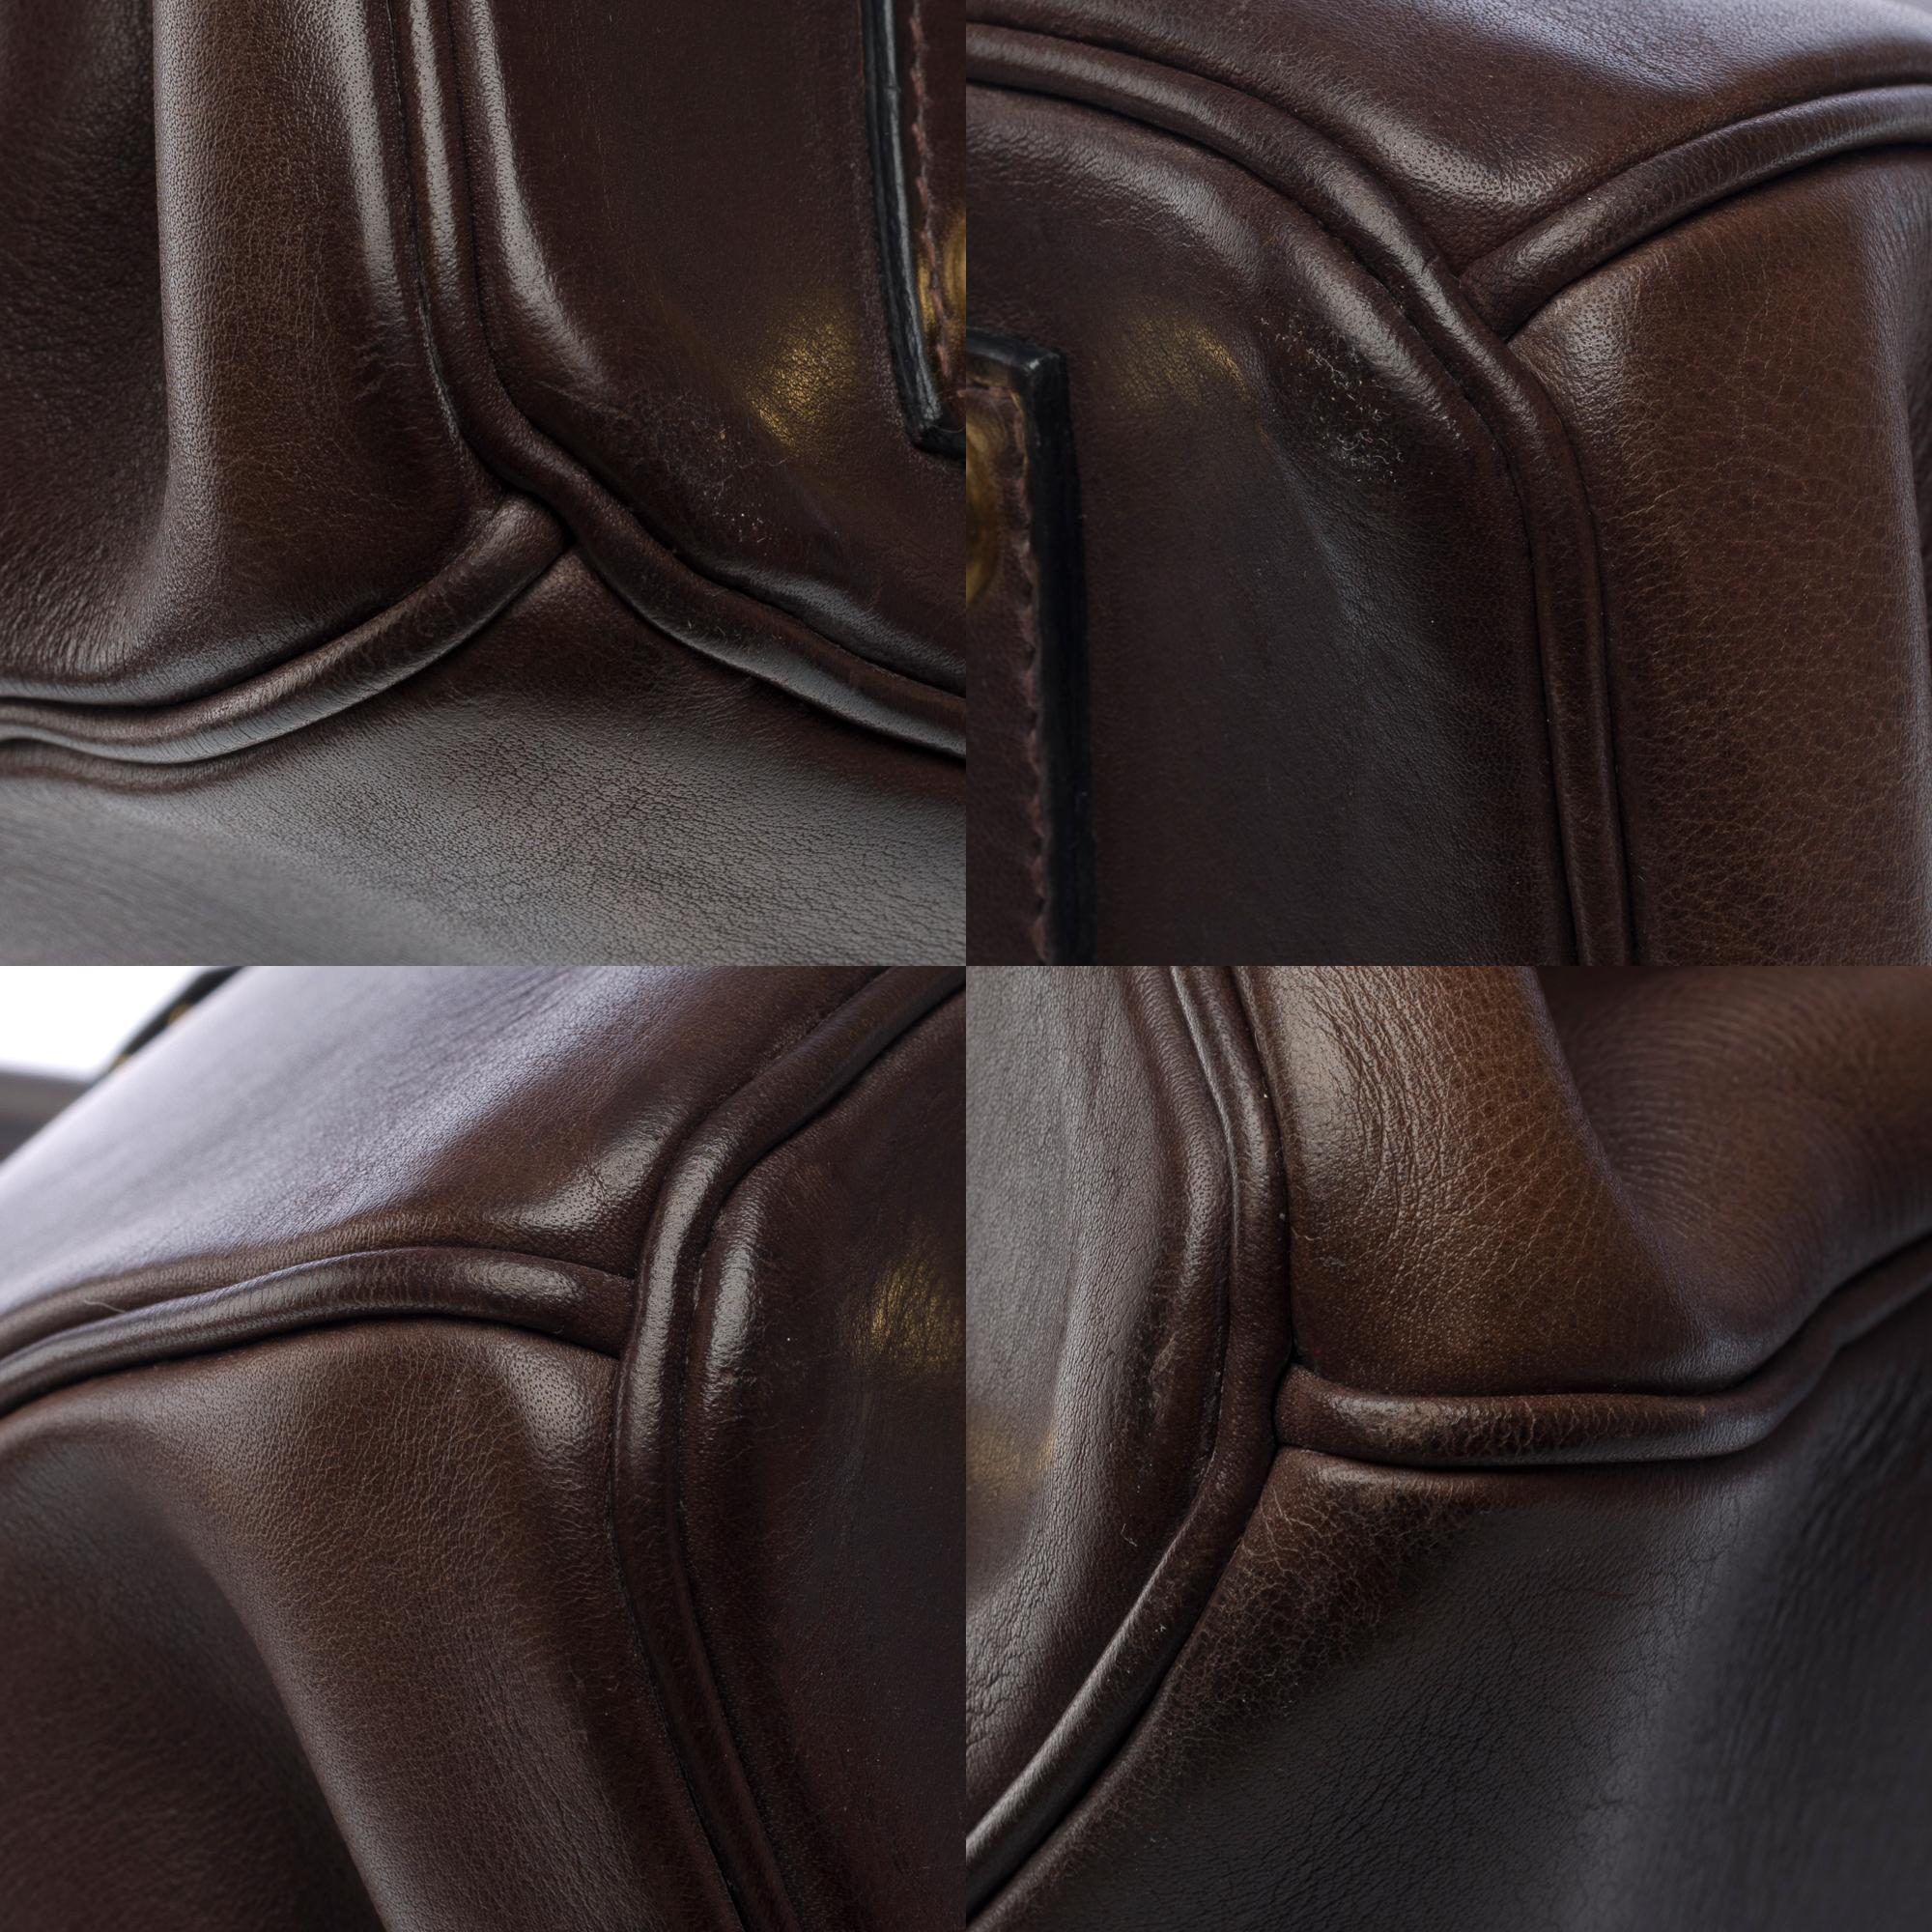 Rare & Exceptional Hermès Birkin 35 handbag in Ebony Brown Barenia leather, GHW For Sale 7